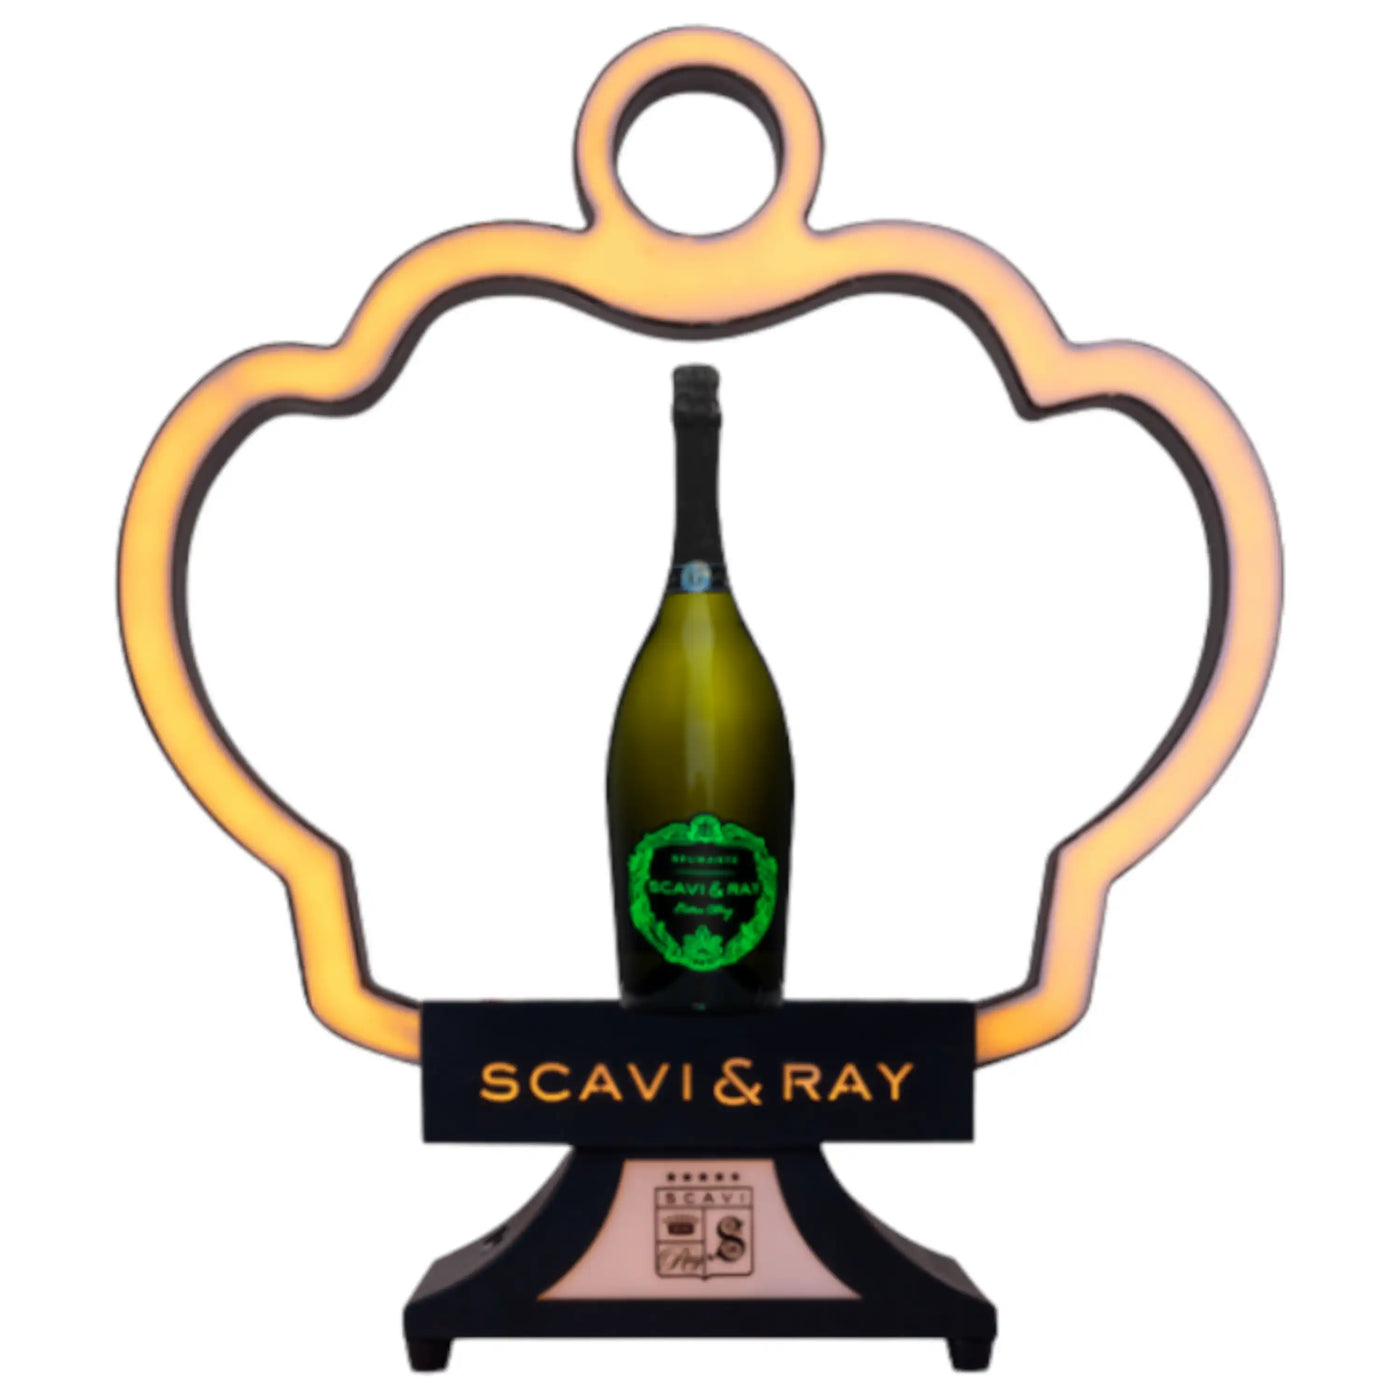 SCAVI & RAY Show Bottle Presenter Crown